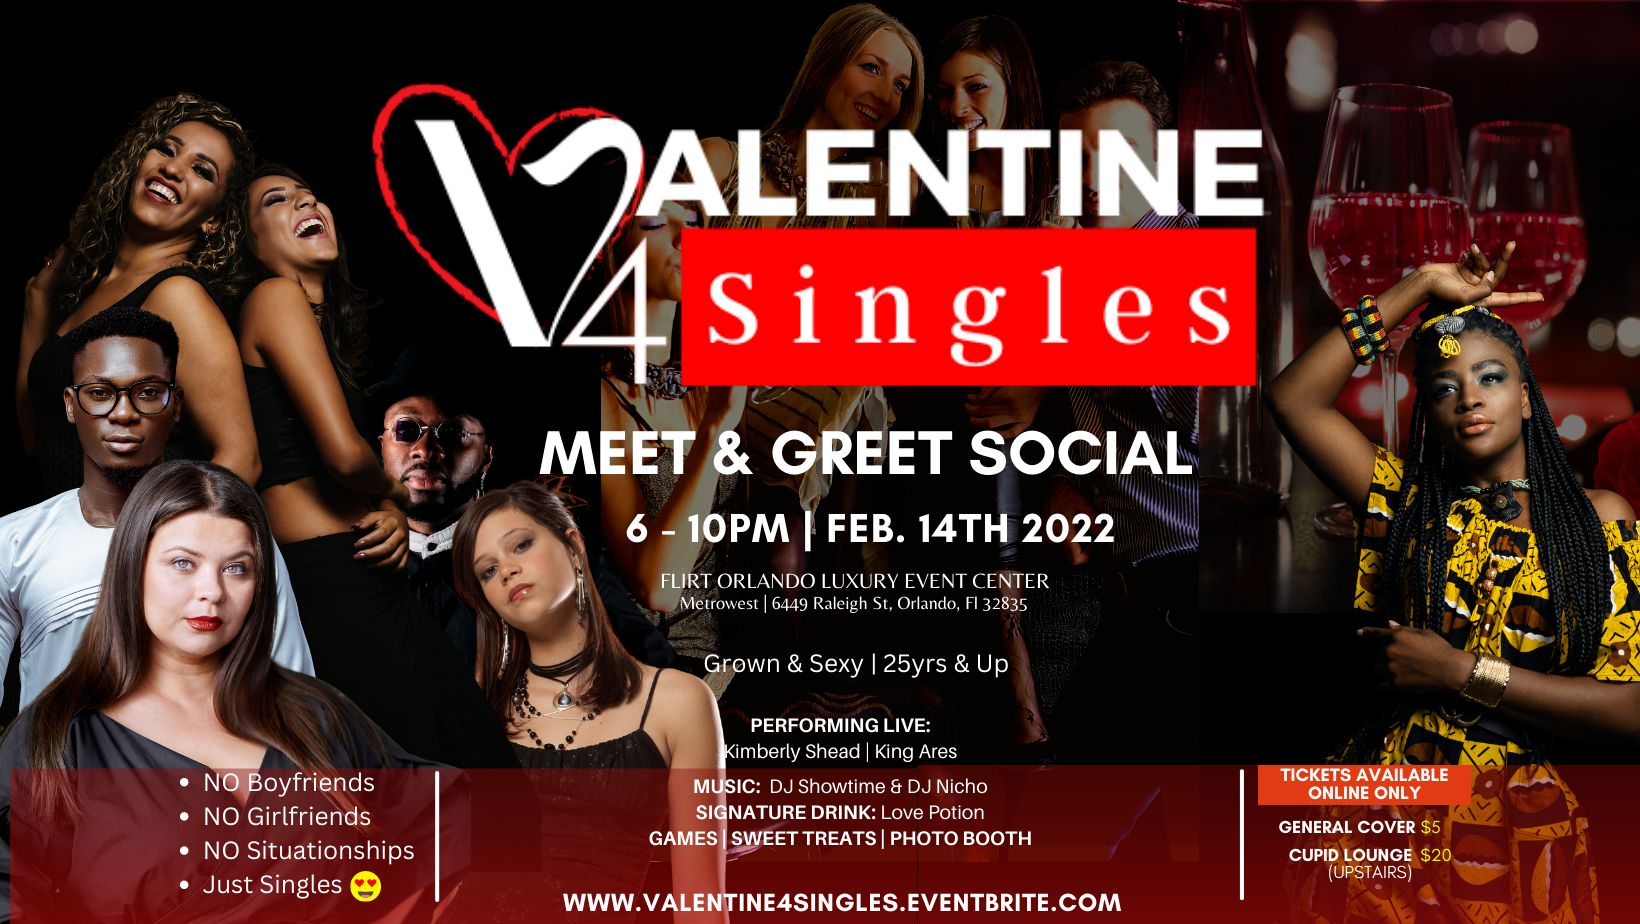 VALENTINE 4 SINGLES - Meet and Greet Social, Orlando, Florida, United States